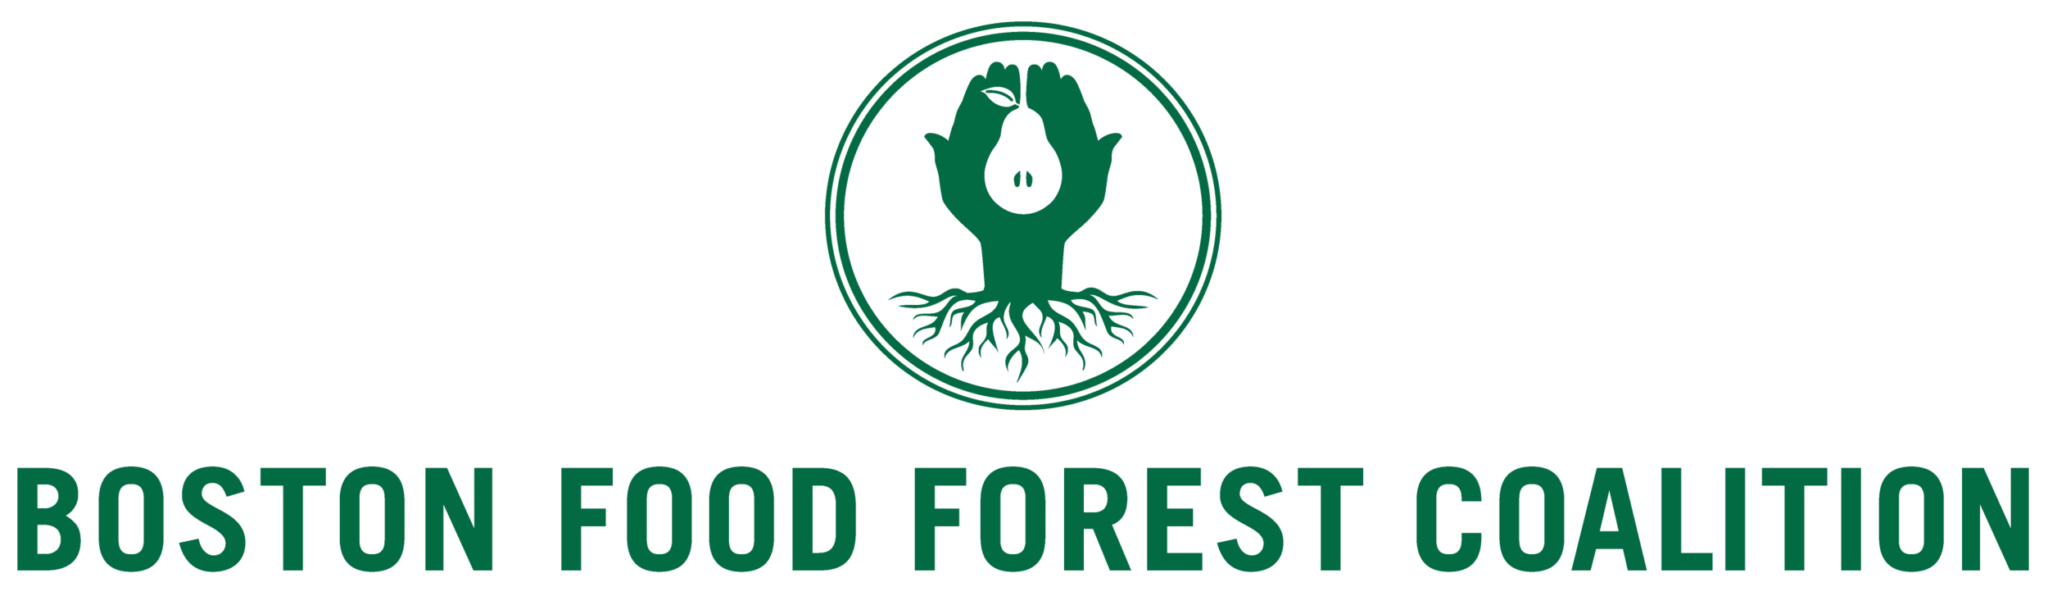 Boston Food Forest Coalition Logo